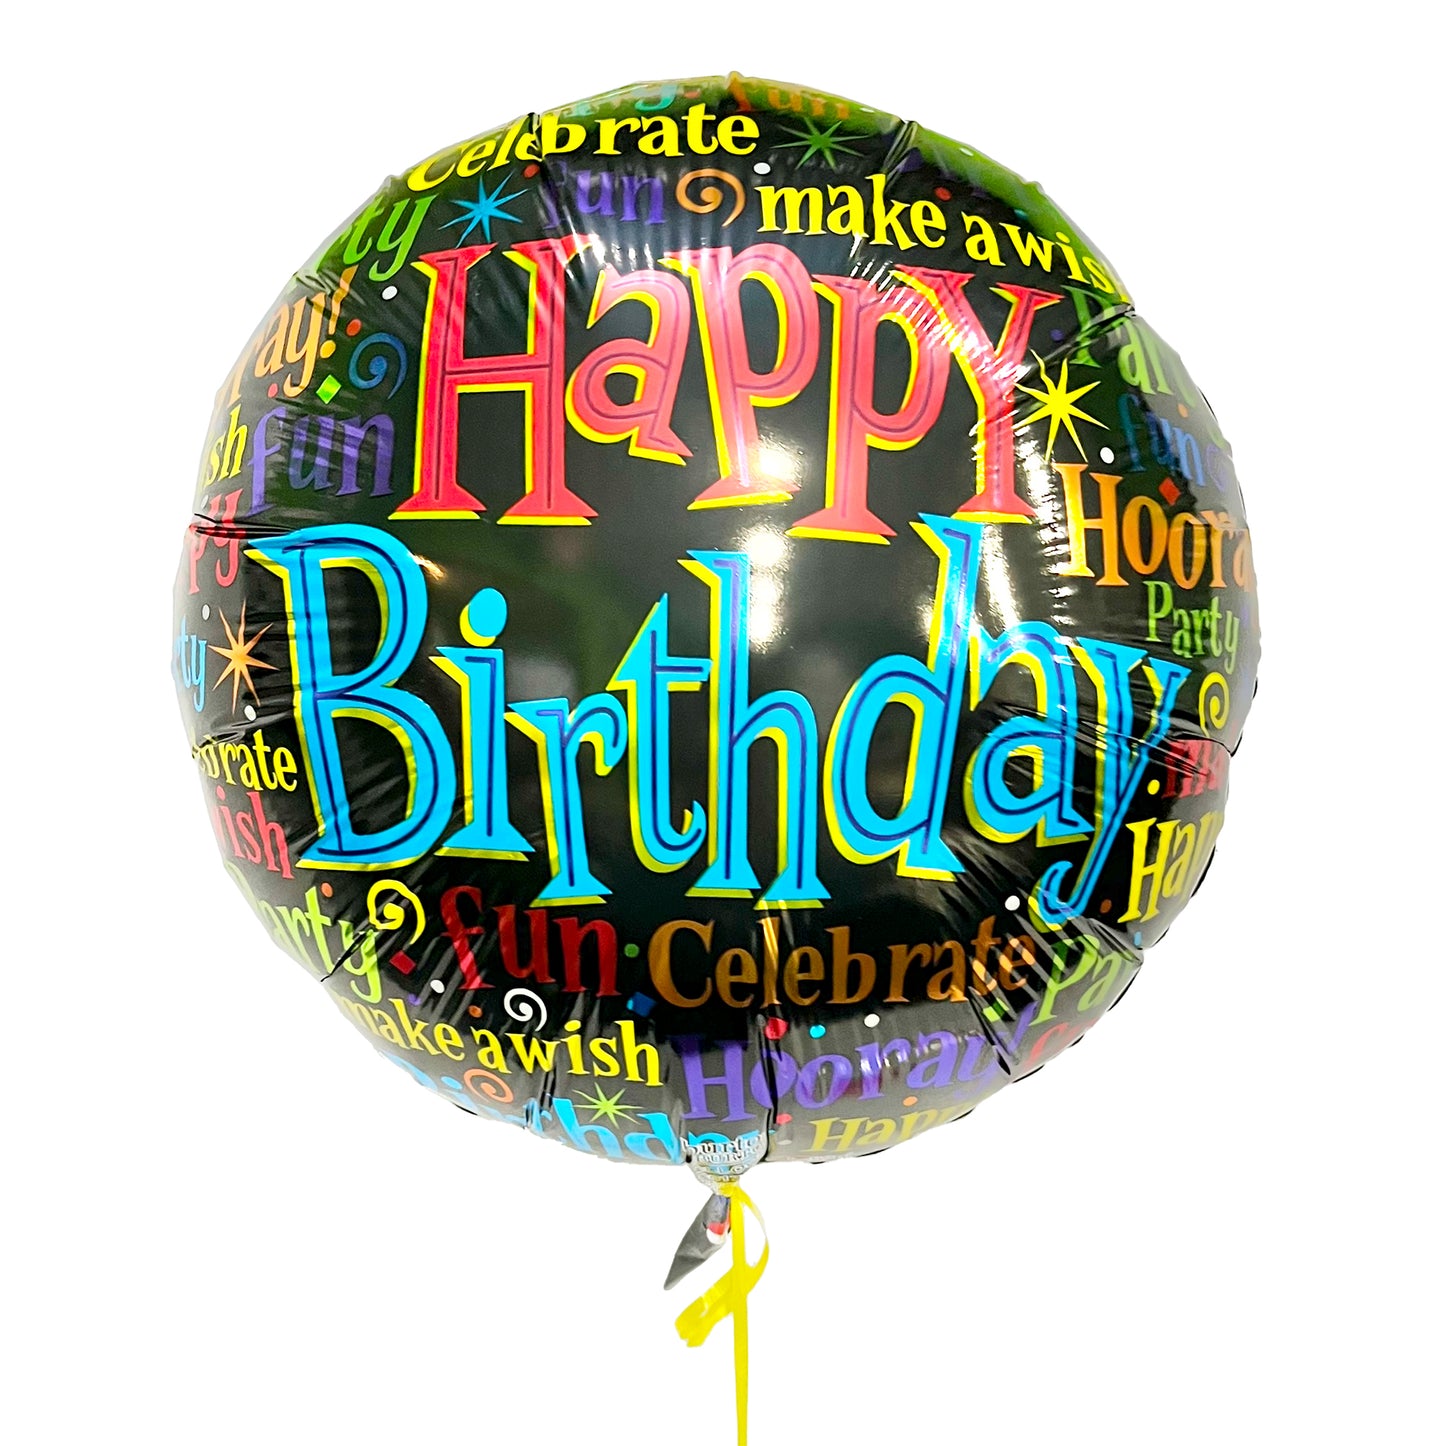 Happy birthday greetings mylar balloon